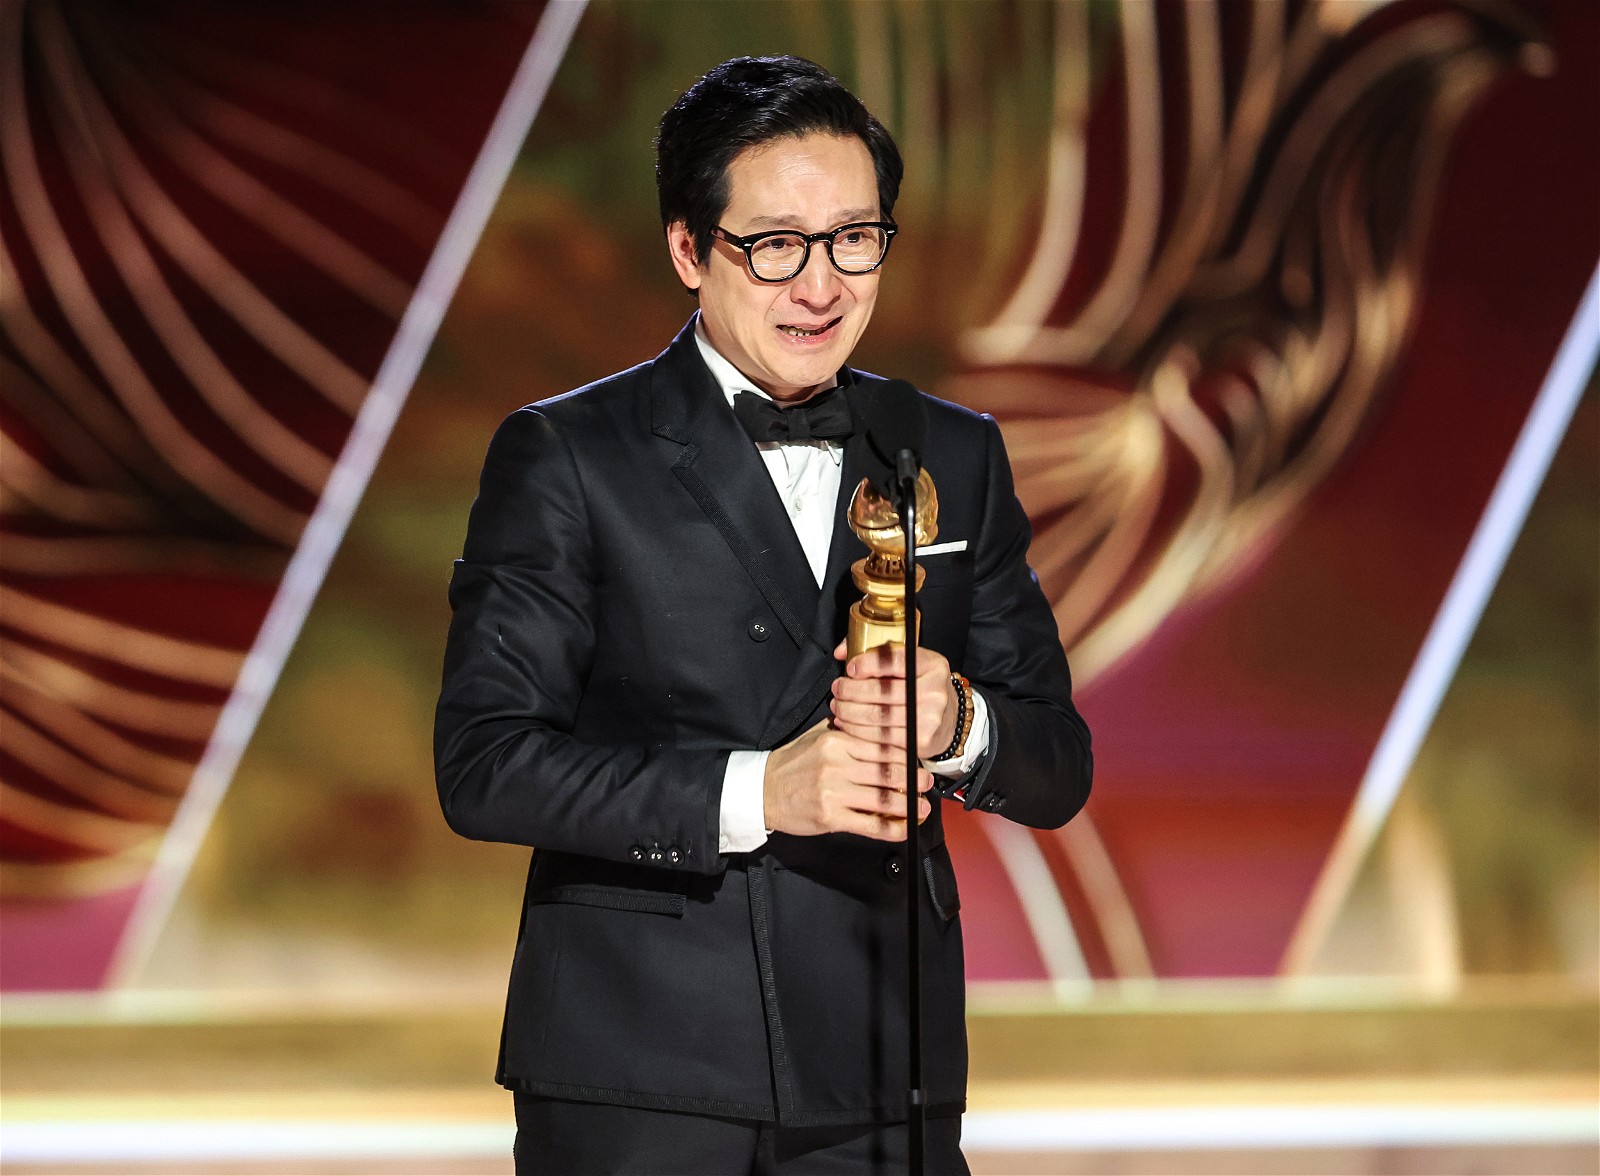 Ke Huy Quan won a Golden Globe